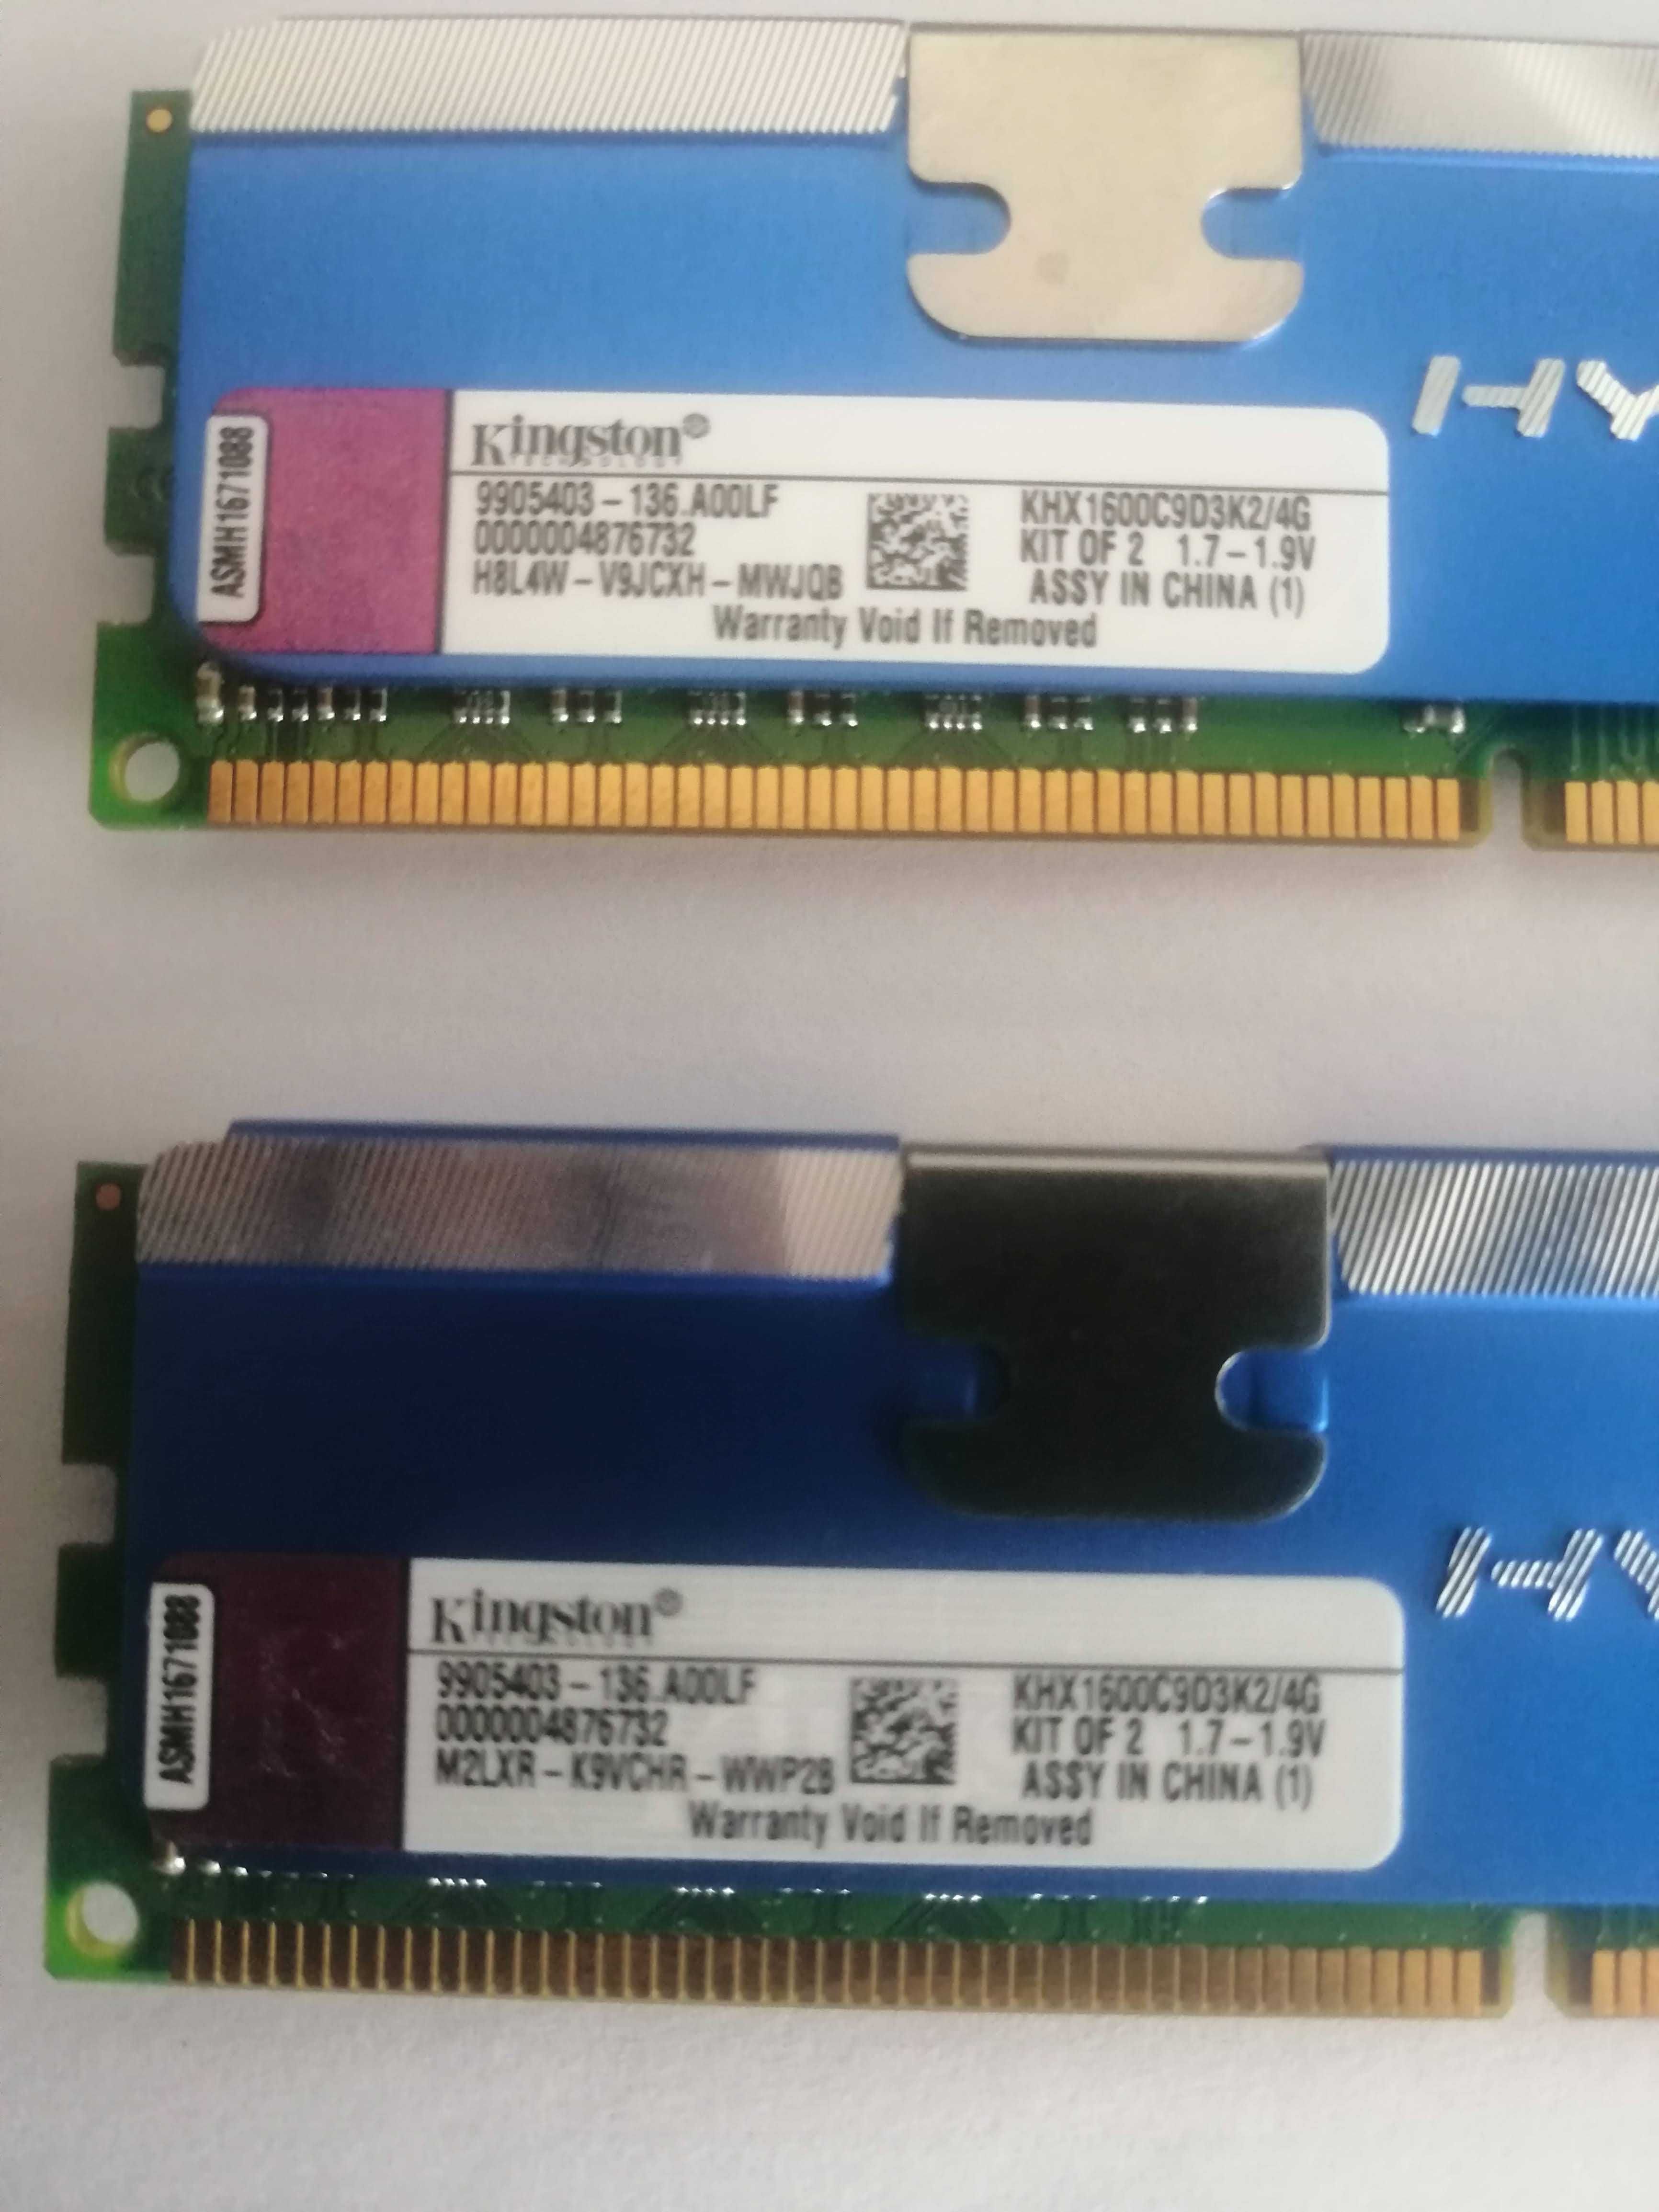 Kit de memória Kingston HyperX KHX1600C9D3K2/4G - 4Gb